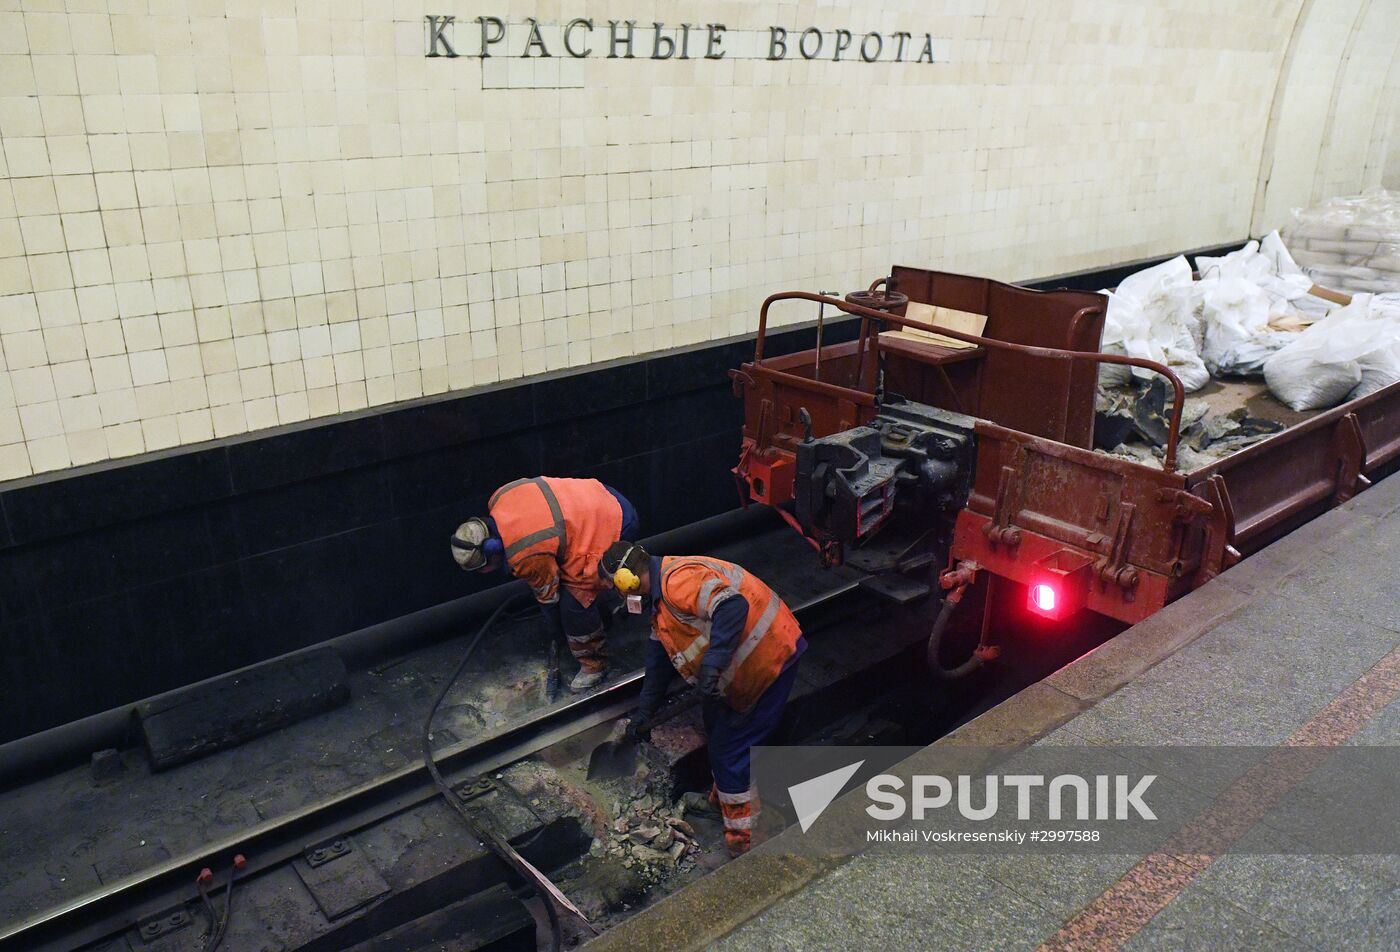 Central section of Moscow Metro Sokolnicheskaya Line under renovation